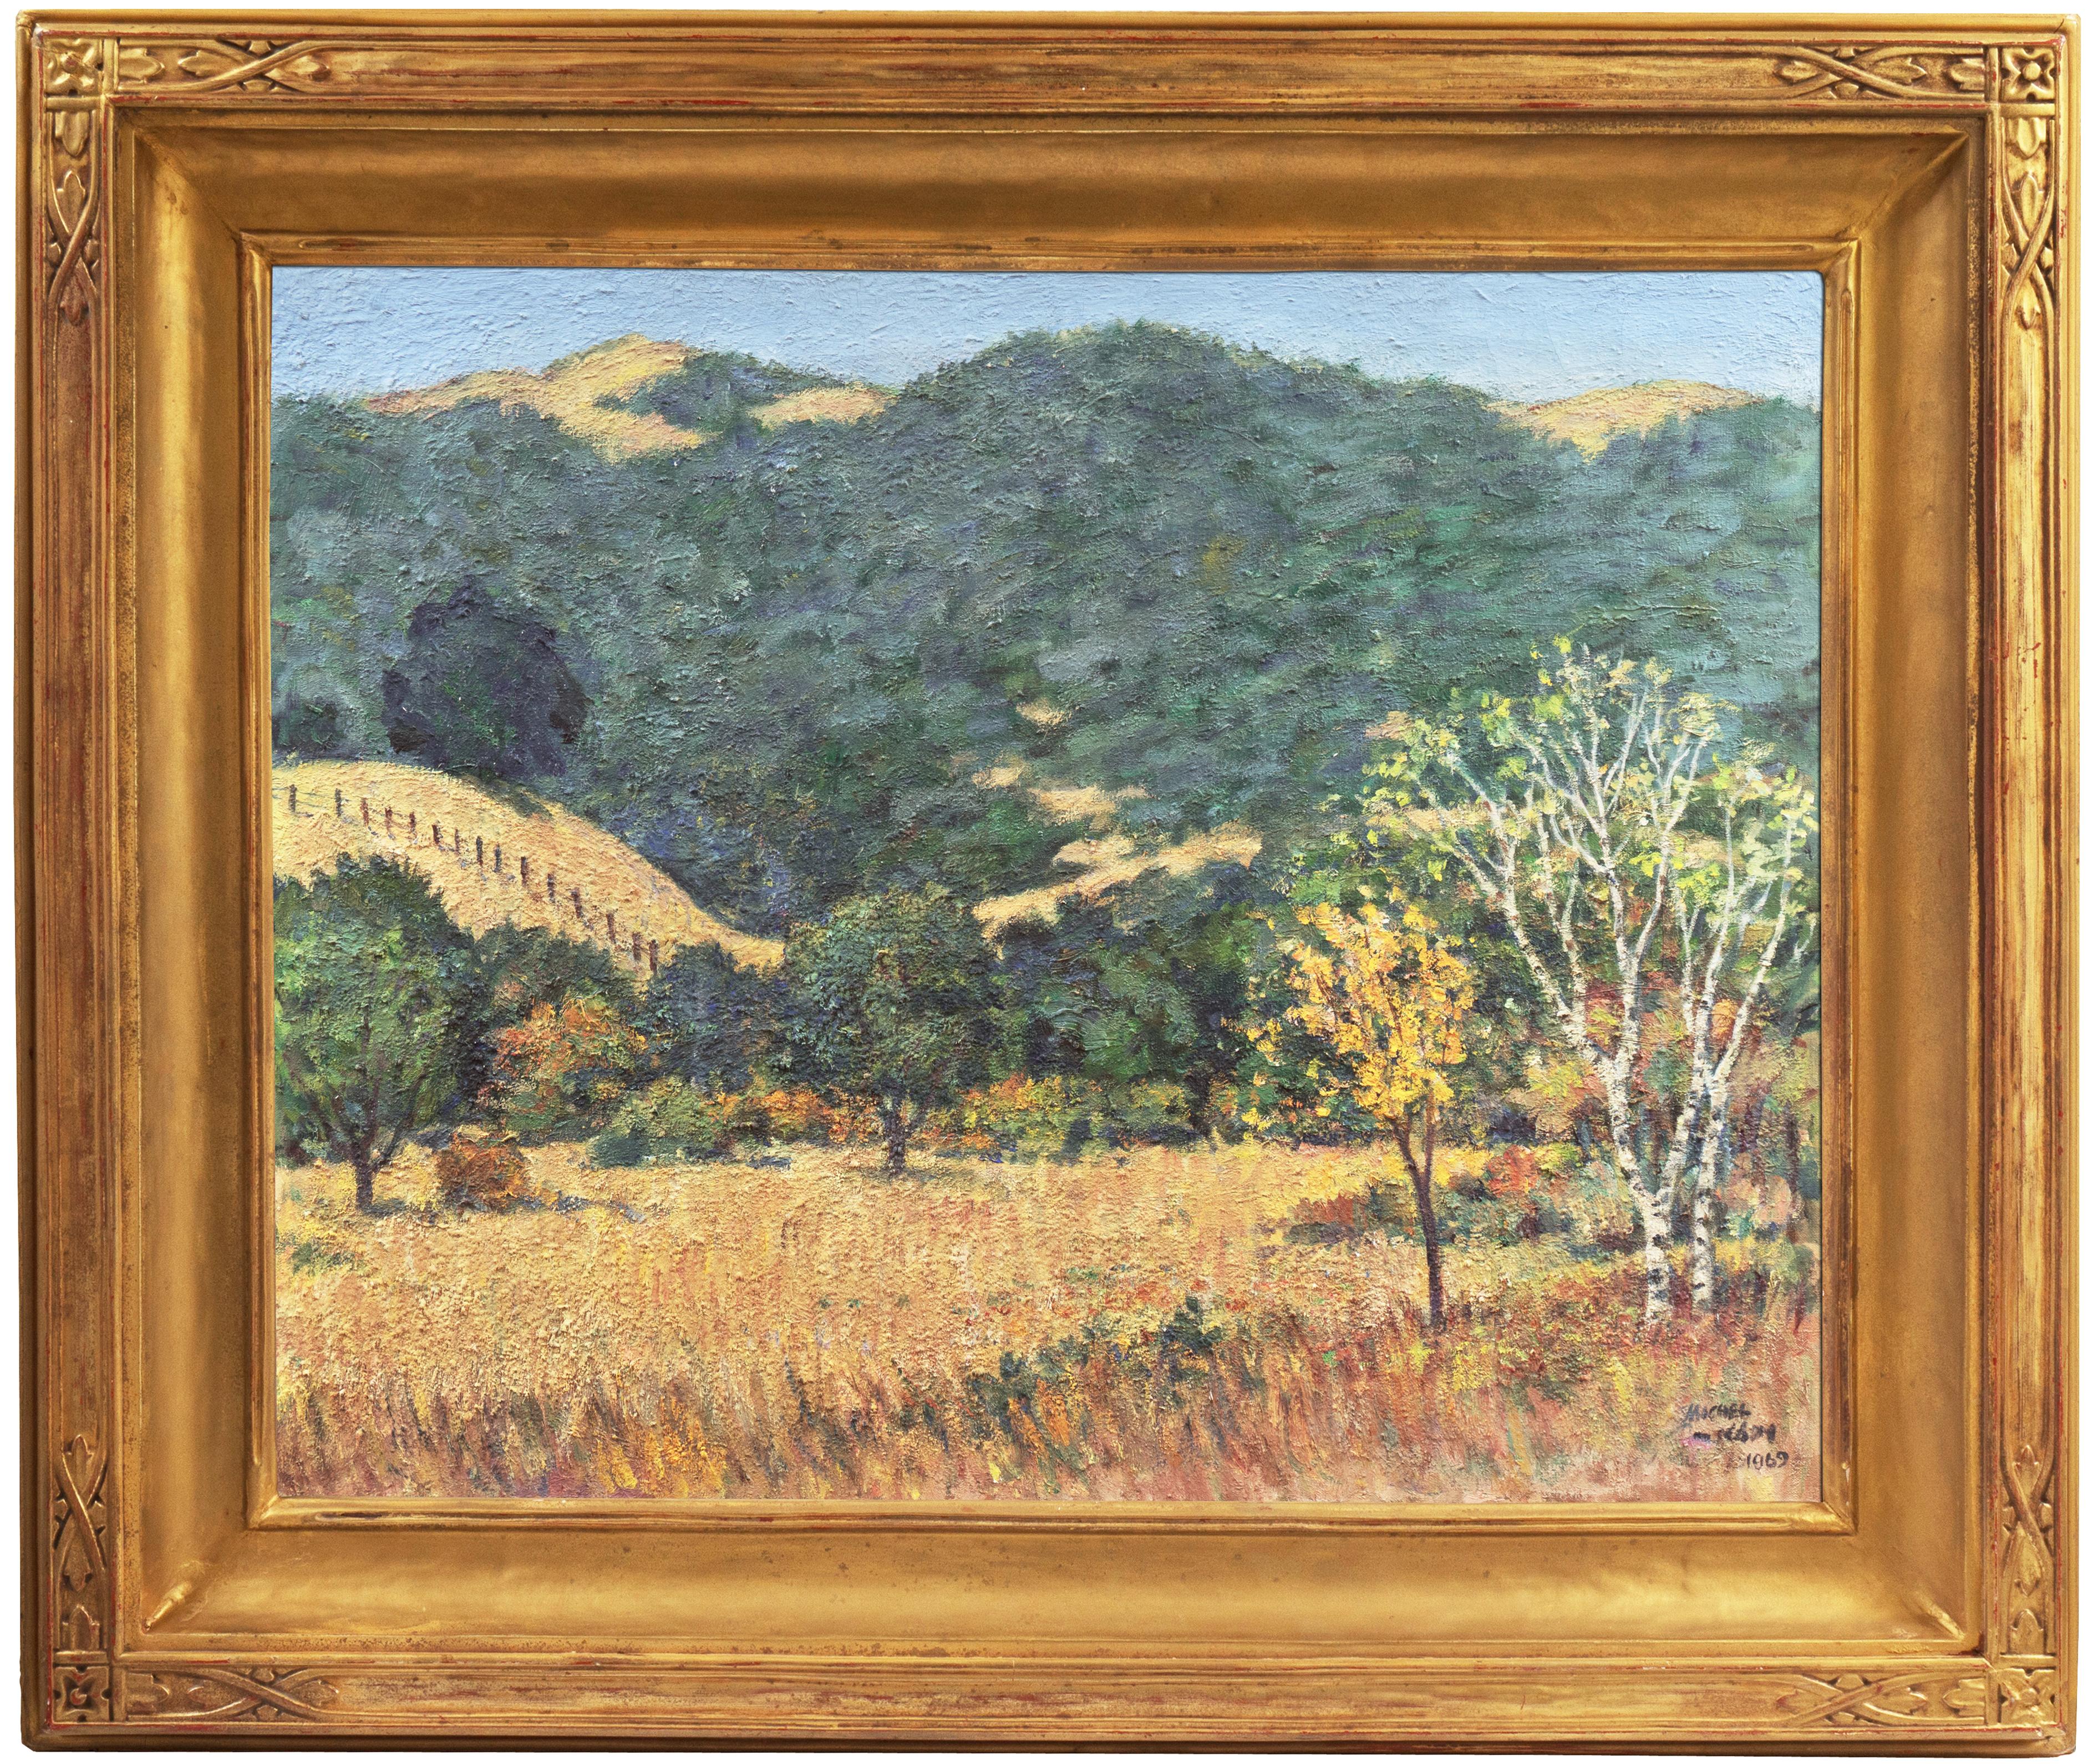 Michel Kady Landscape Art - Golden California Impressionist Landscape, Springtime with Birch and Oak Trees